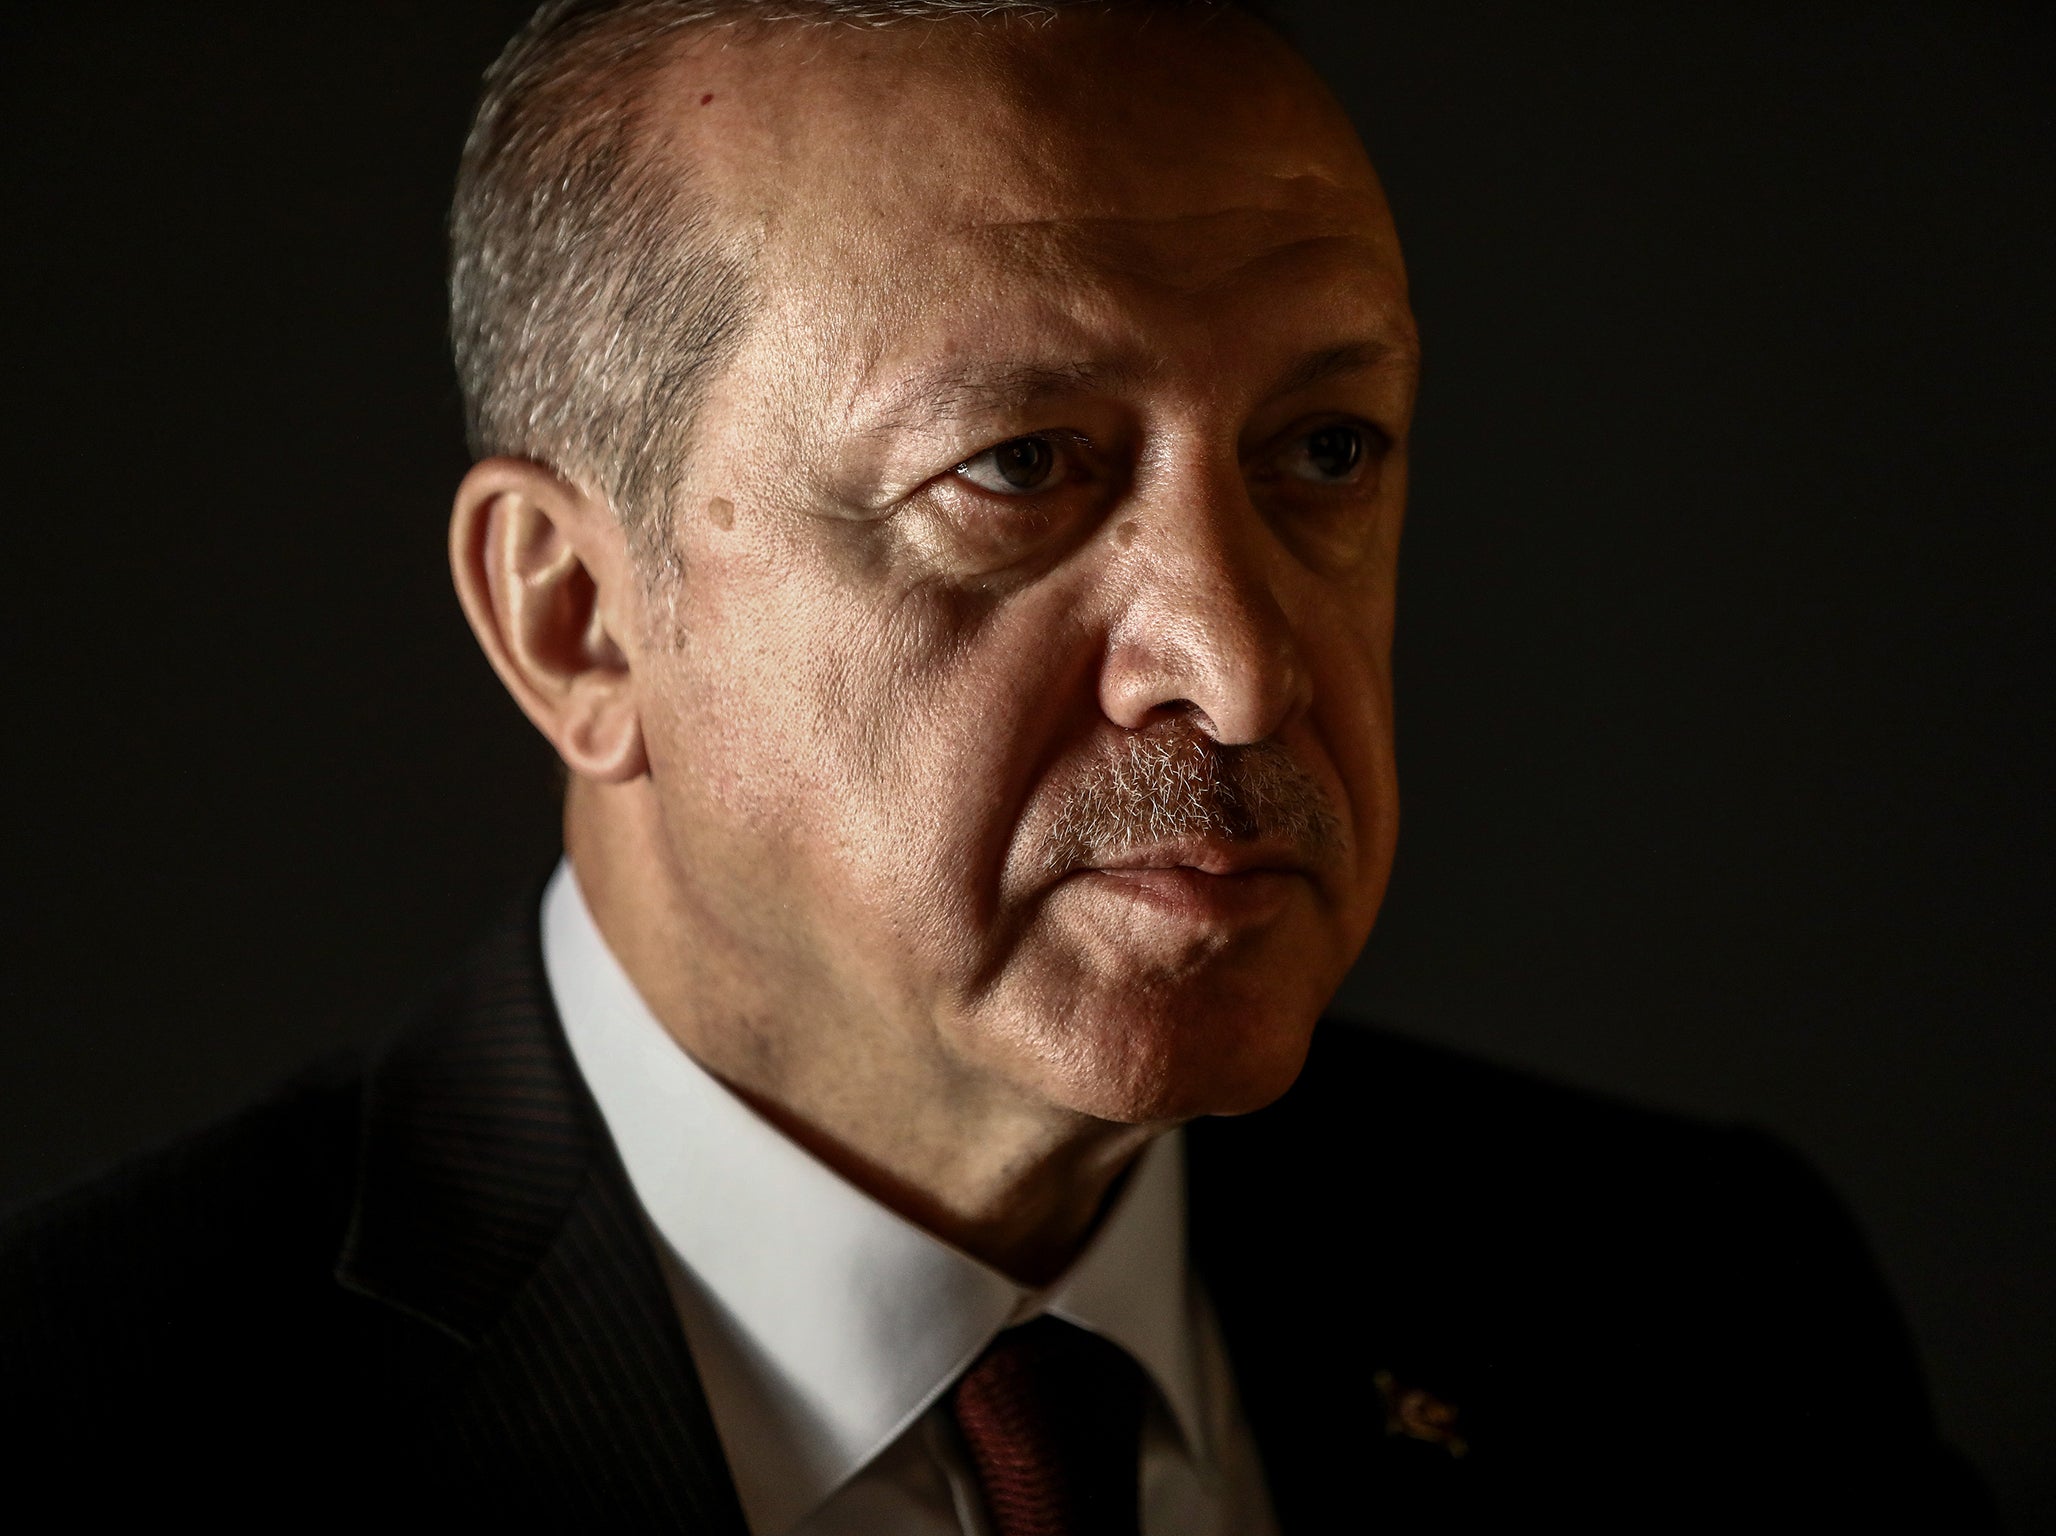 Erdogan has dominated Turkish politics since 2002